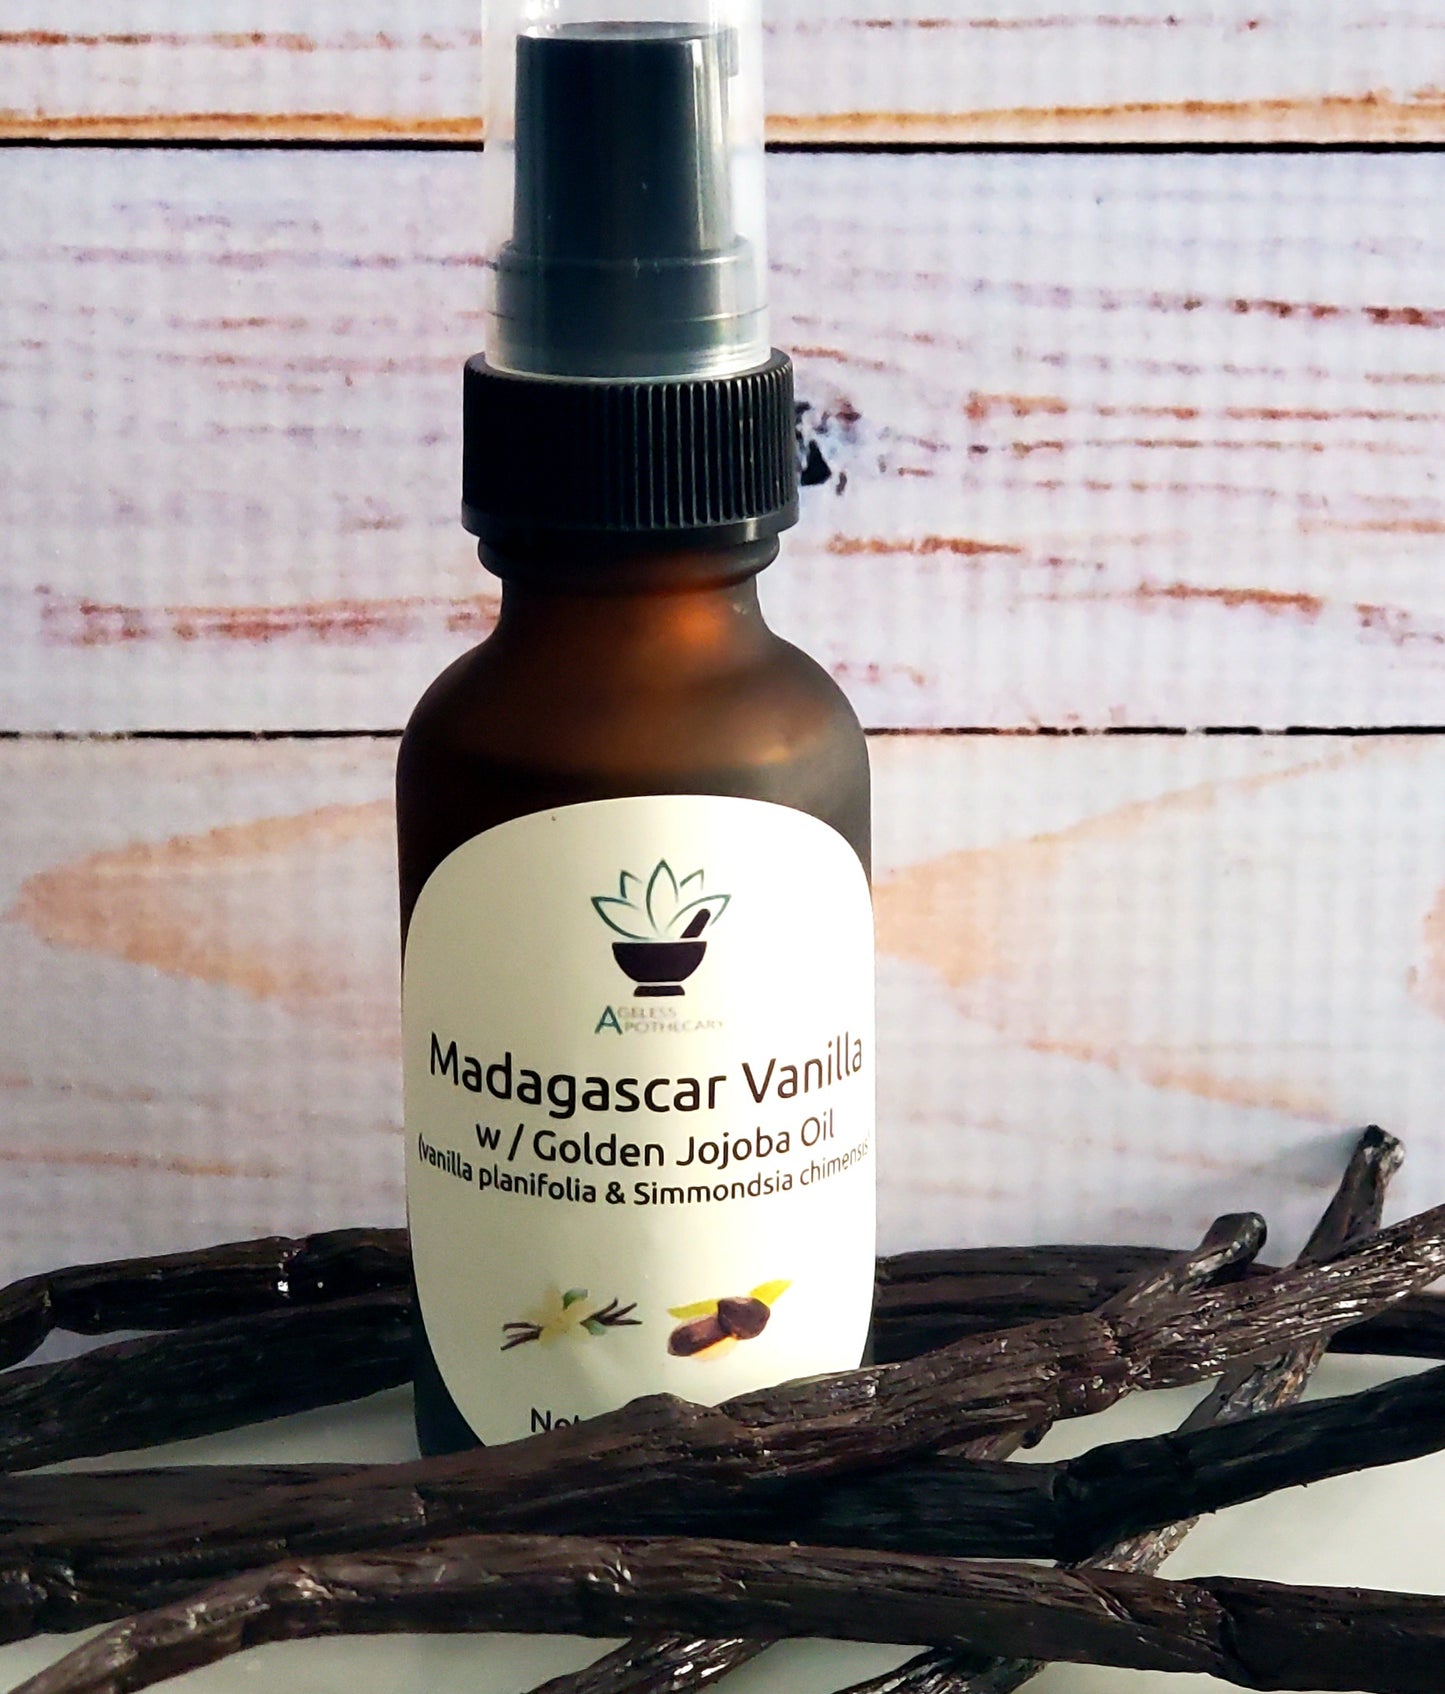 Madagascar Vanilla Bean Oil Infused in Golden Jojoba Oil (v. planifolia and Simmondsia)